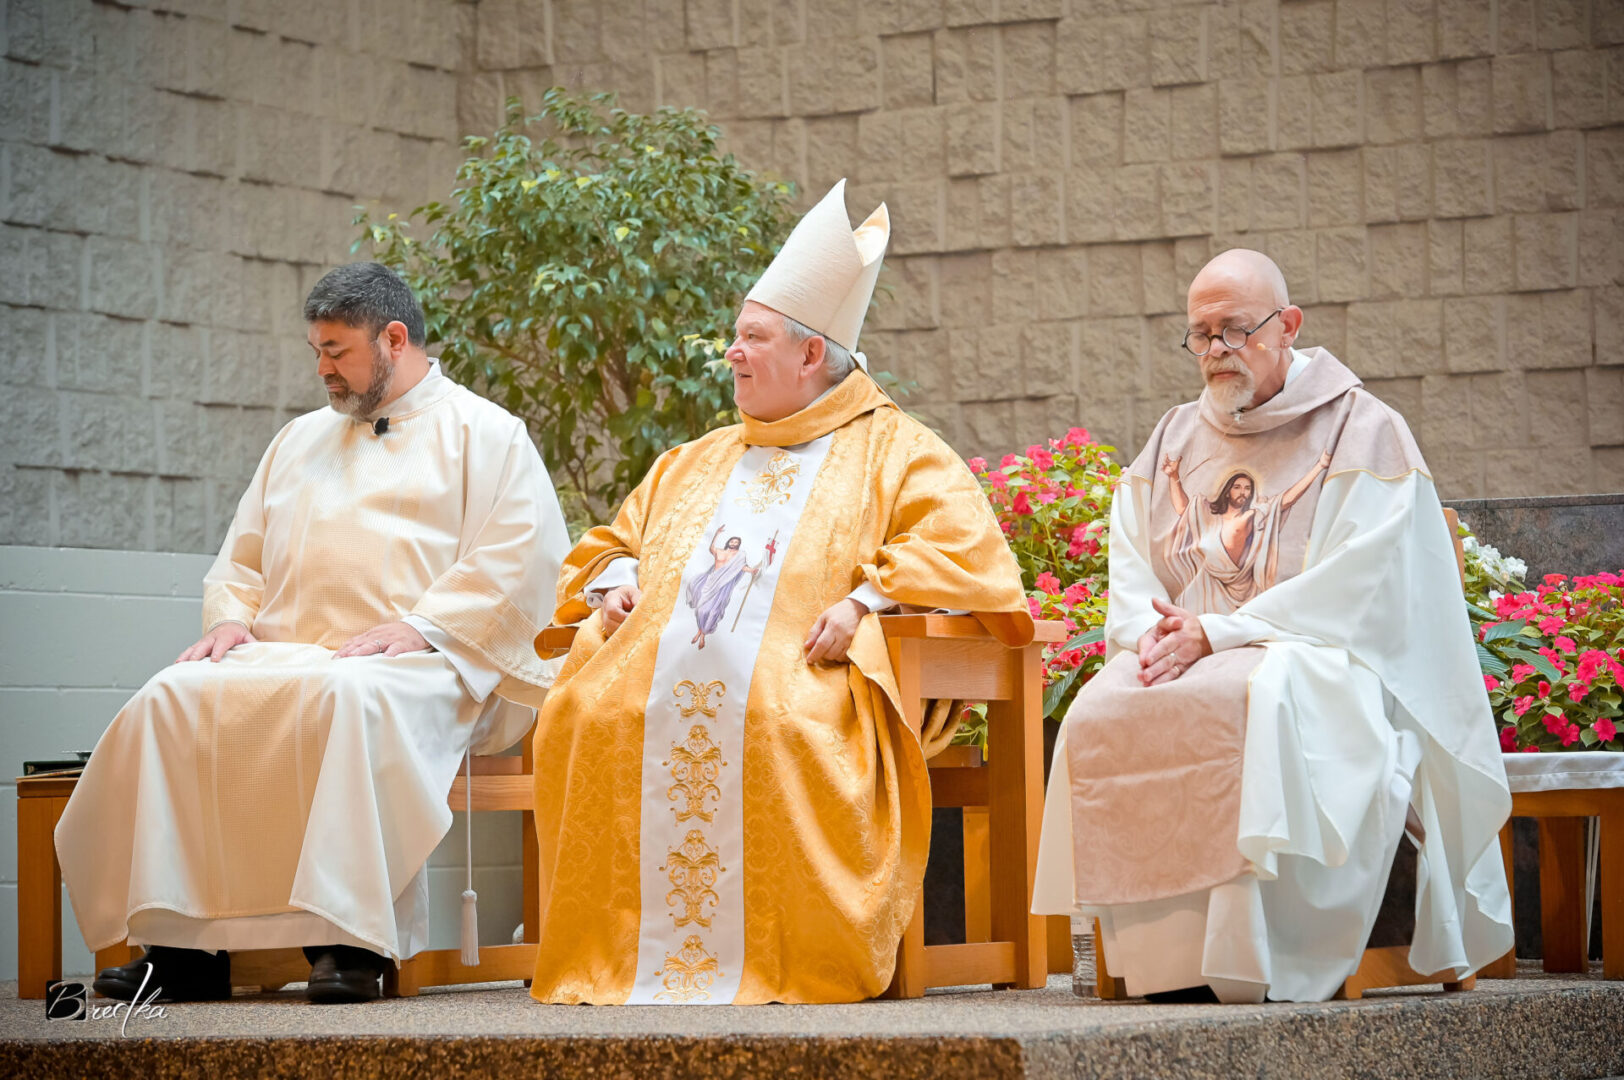 Three men in religious attire seated.